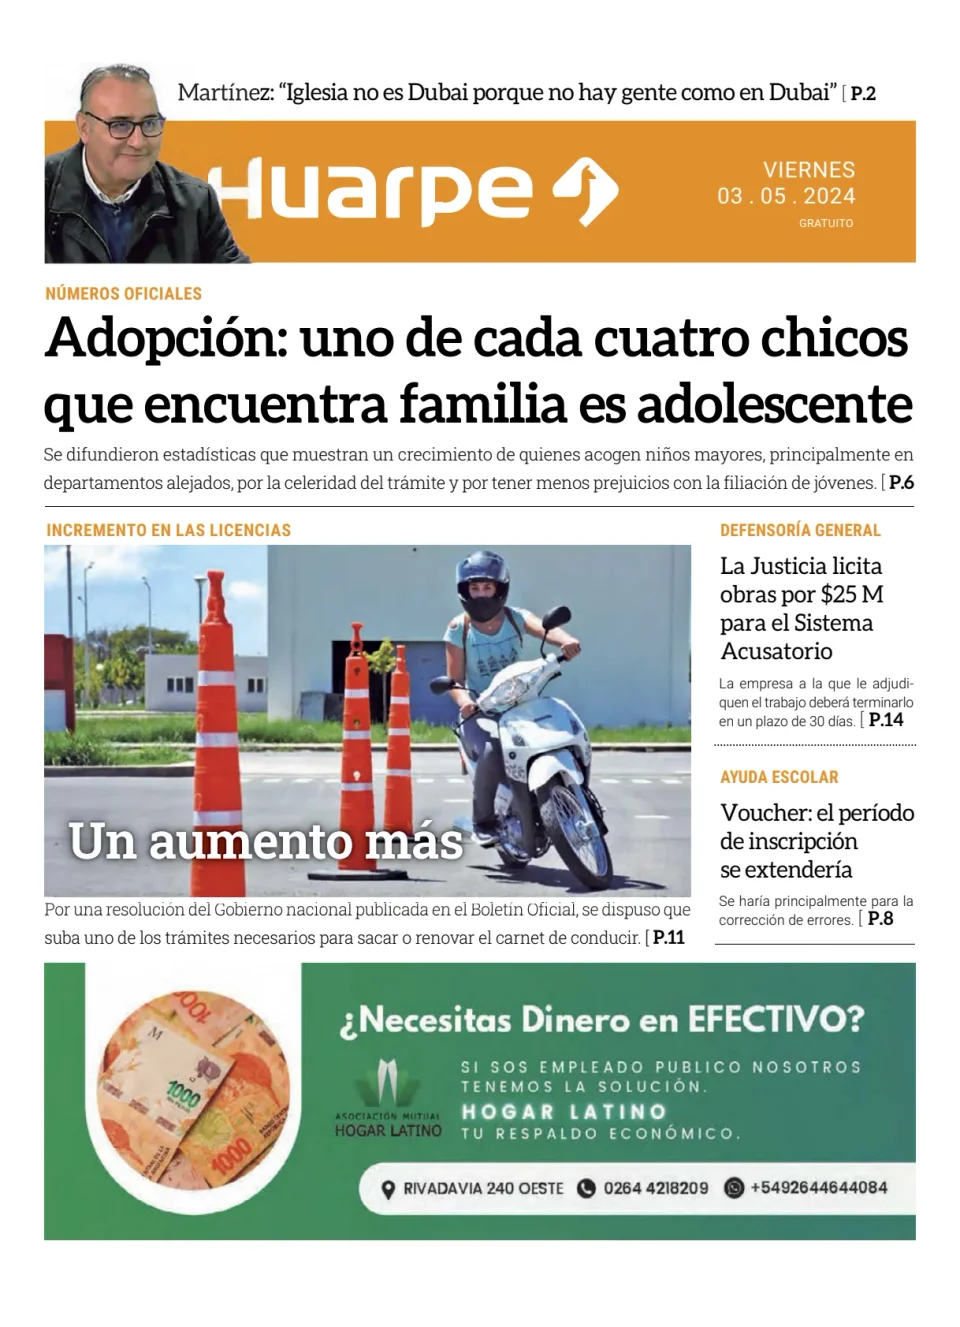 Diario Huarpe